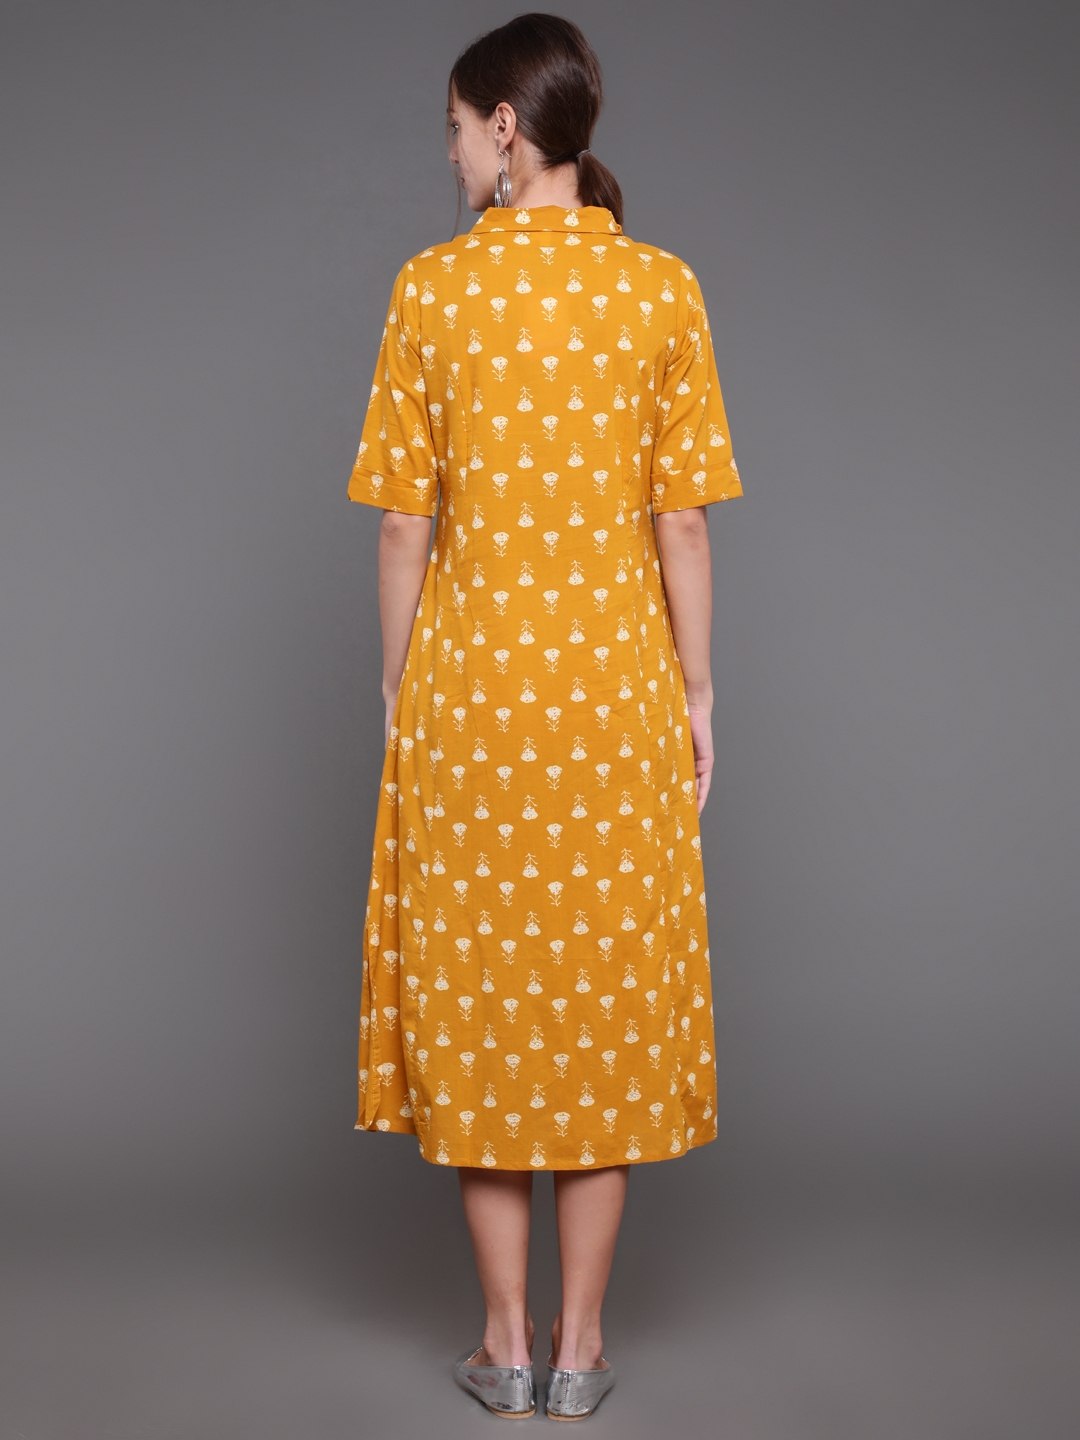 ANTARAN | Printed Cotton Yellow Dress 2